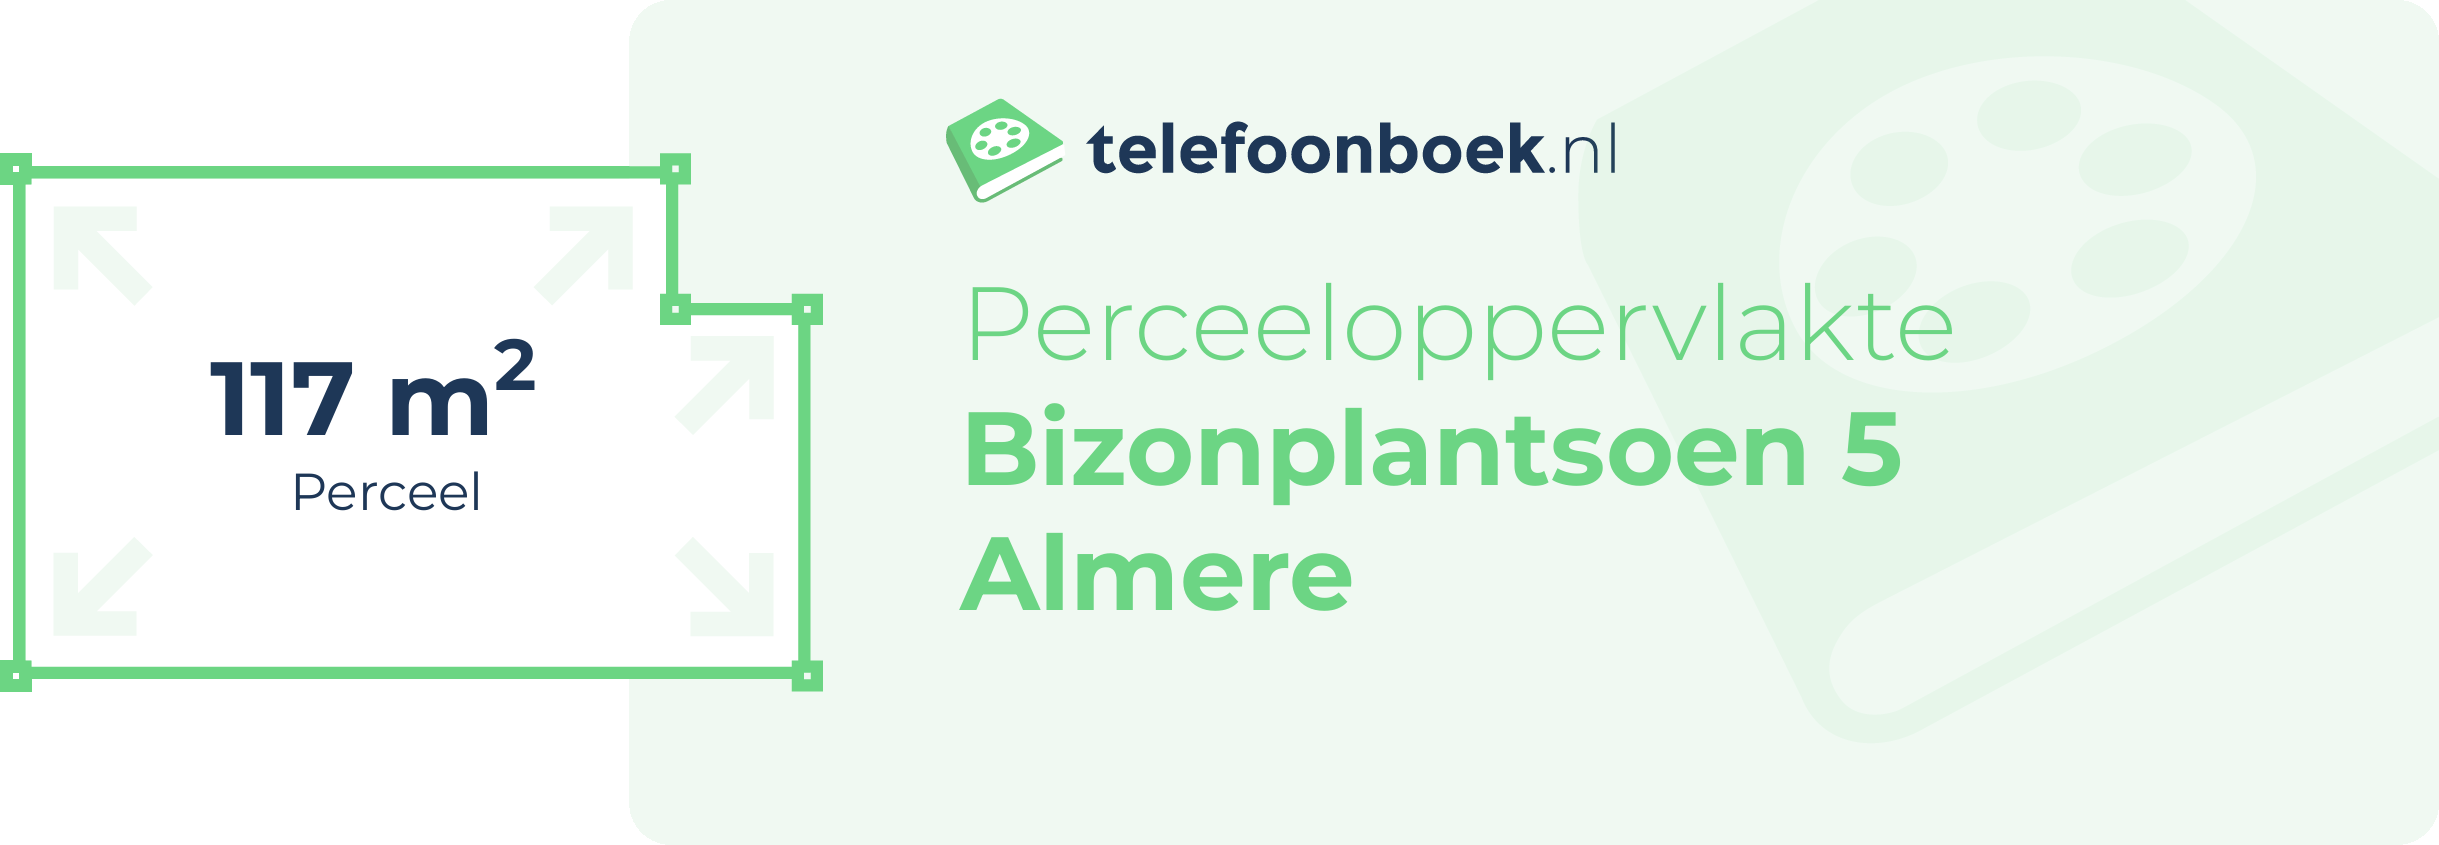 Perceeloppervlakte Bizonplantsoen 5 Almere